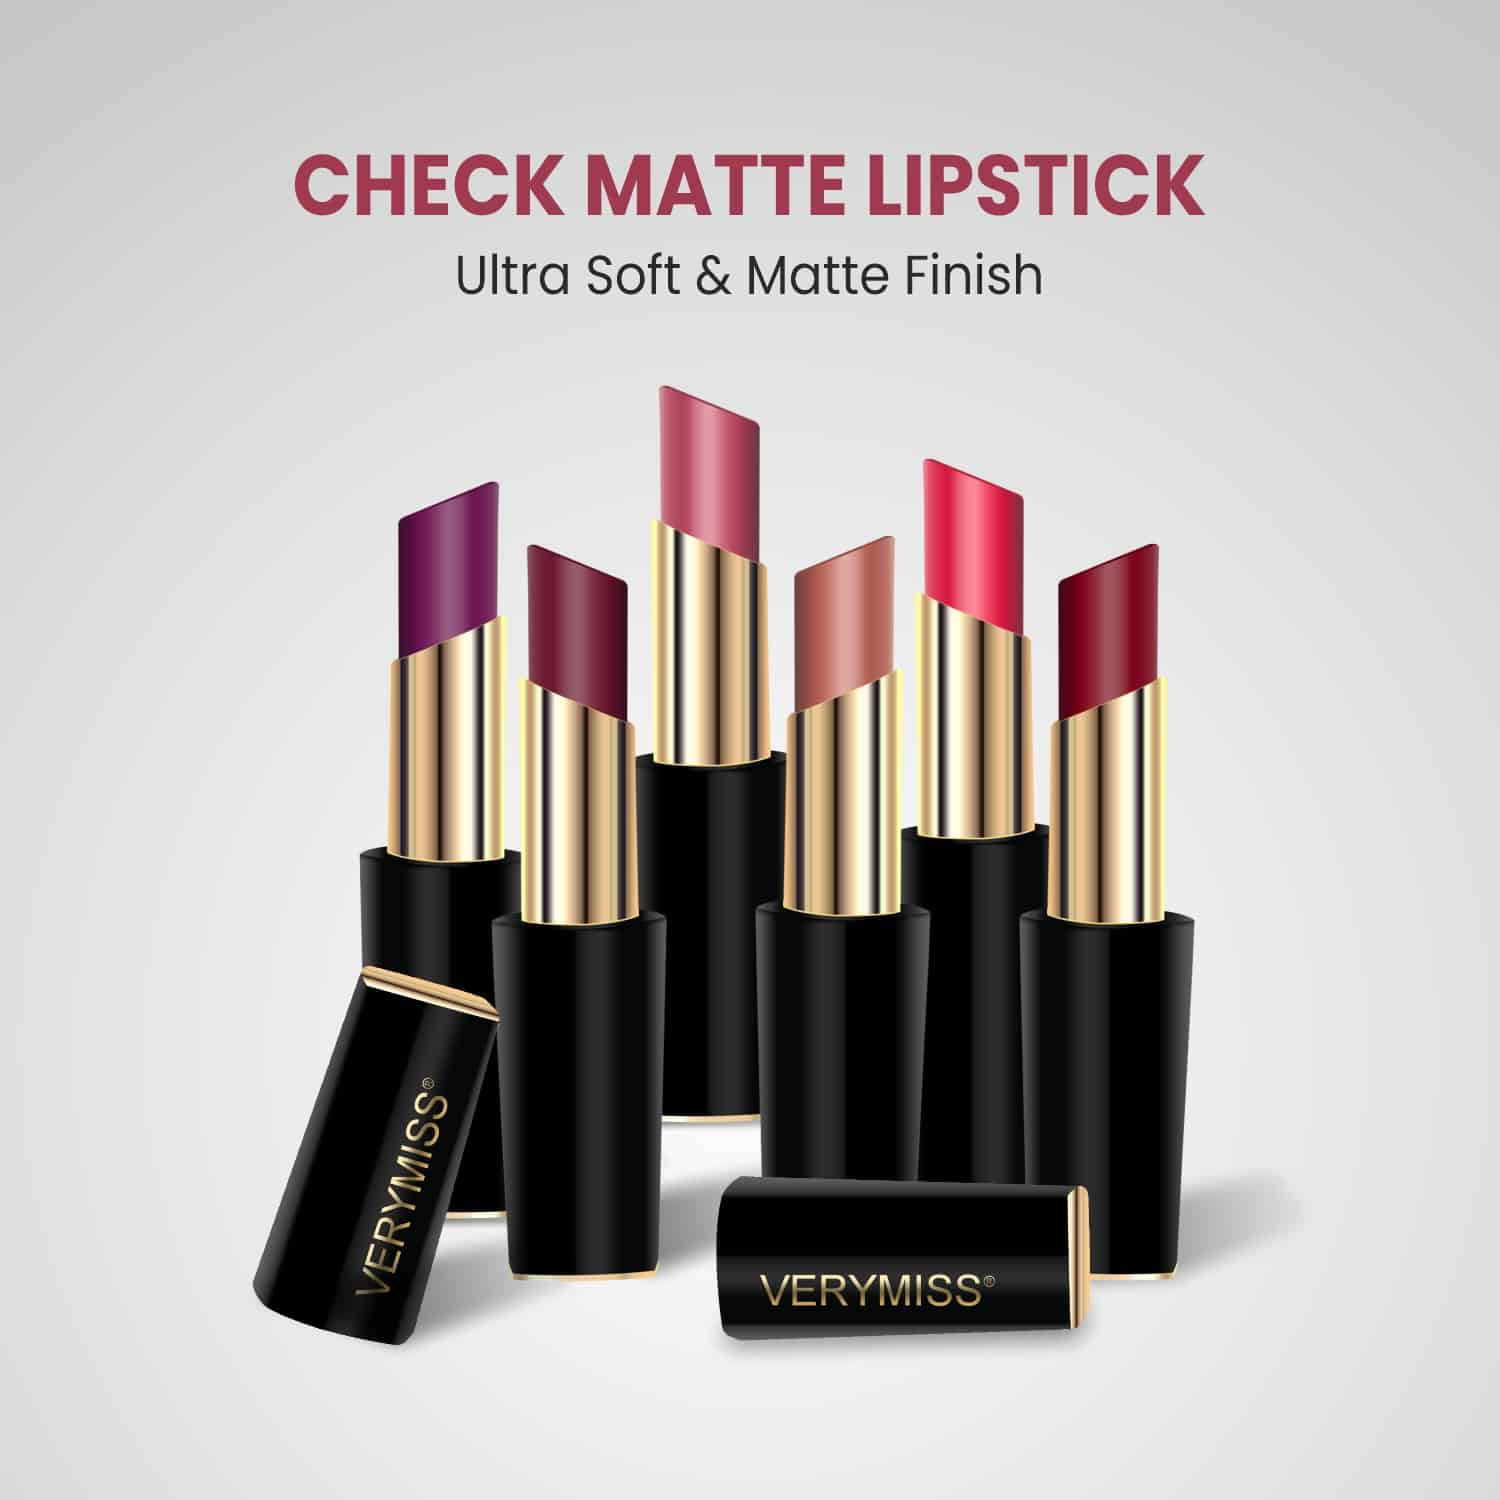 Check Matte Lipstick - 06 Evil Queen